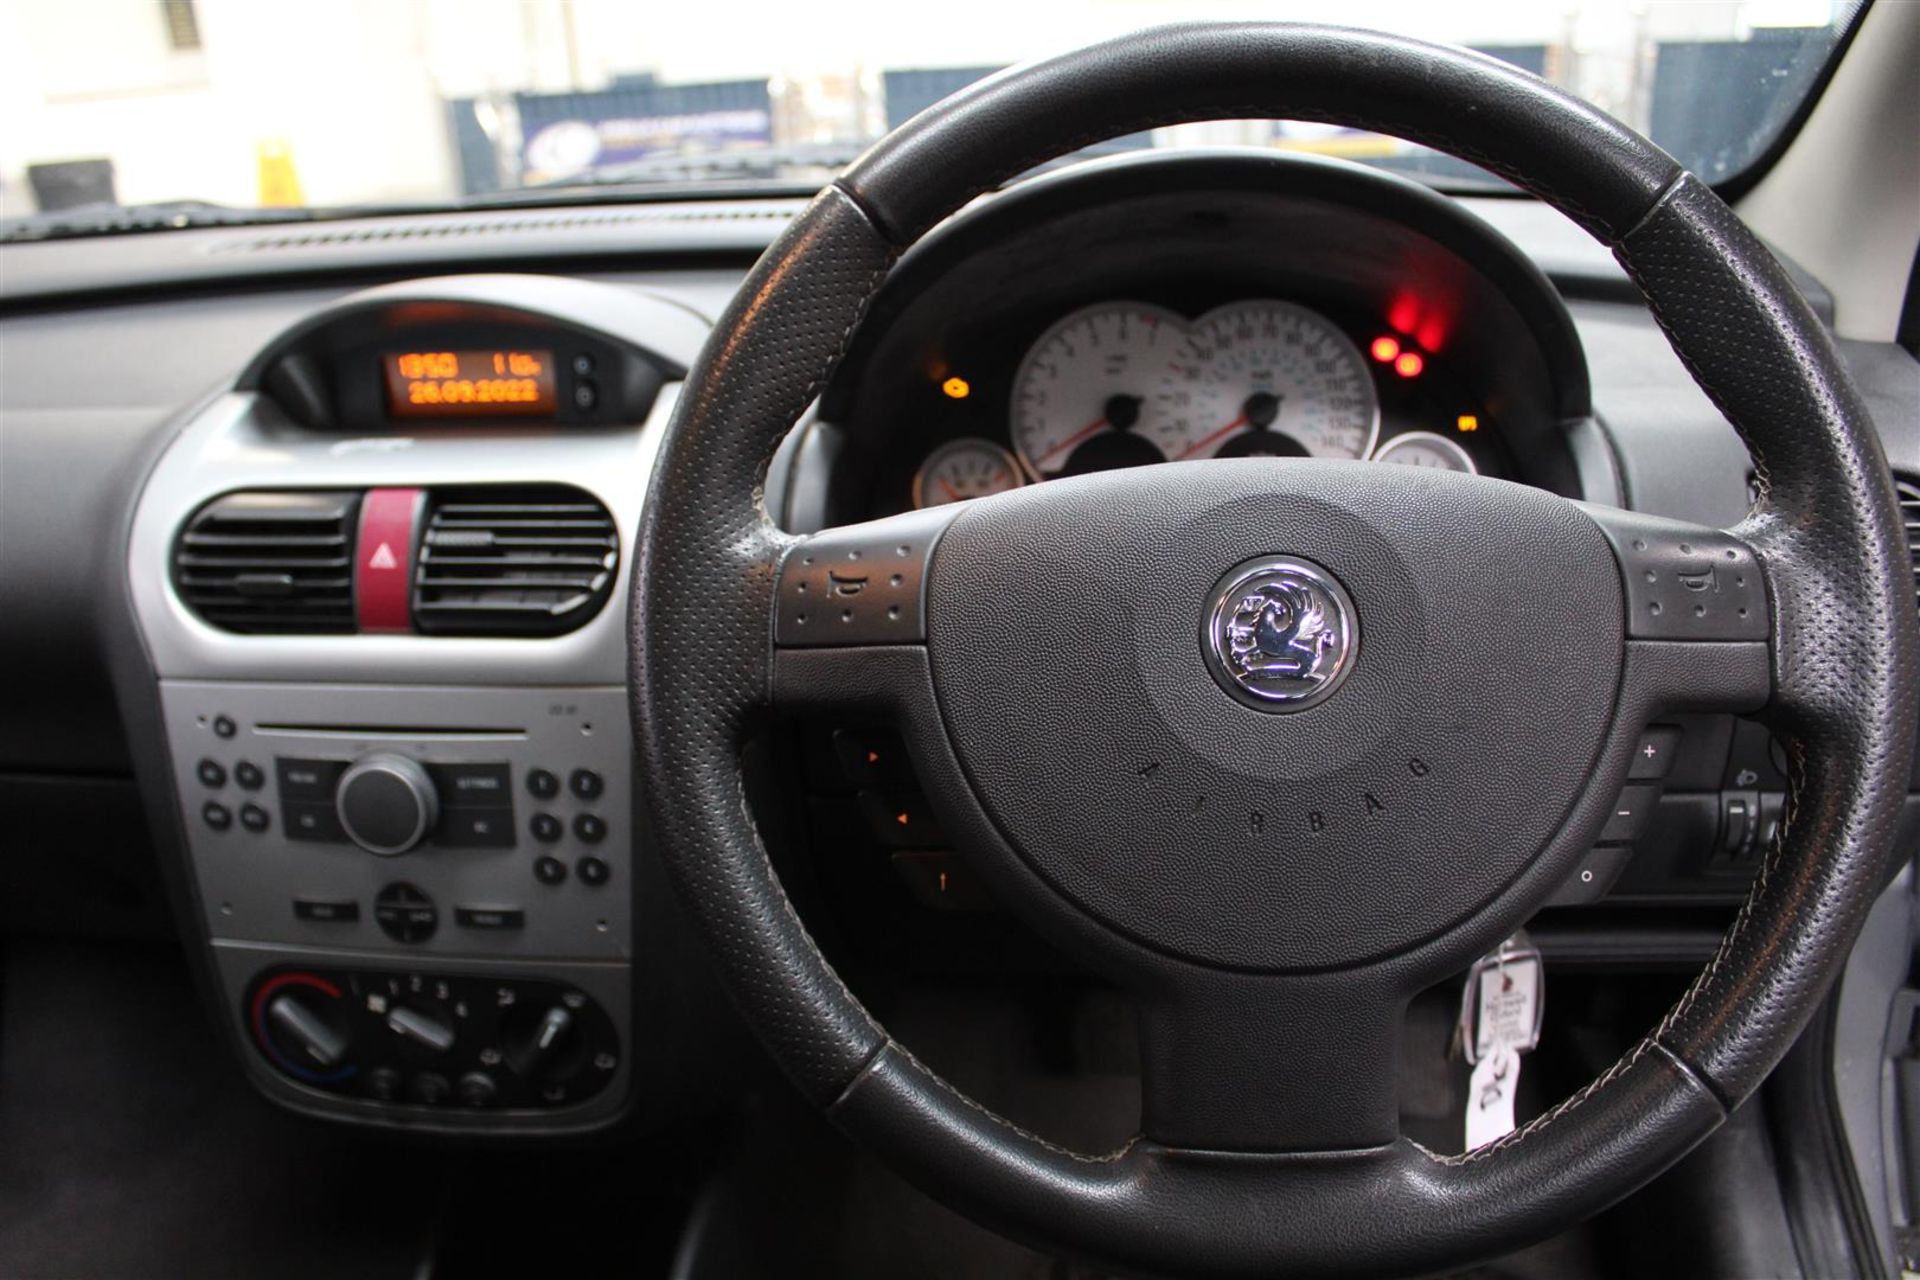 06 06 Vauxhall Corsa SXI + - Image 20 of 29